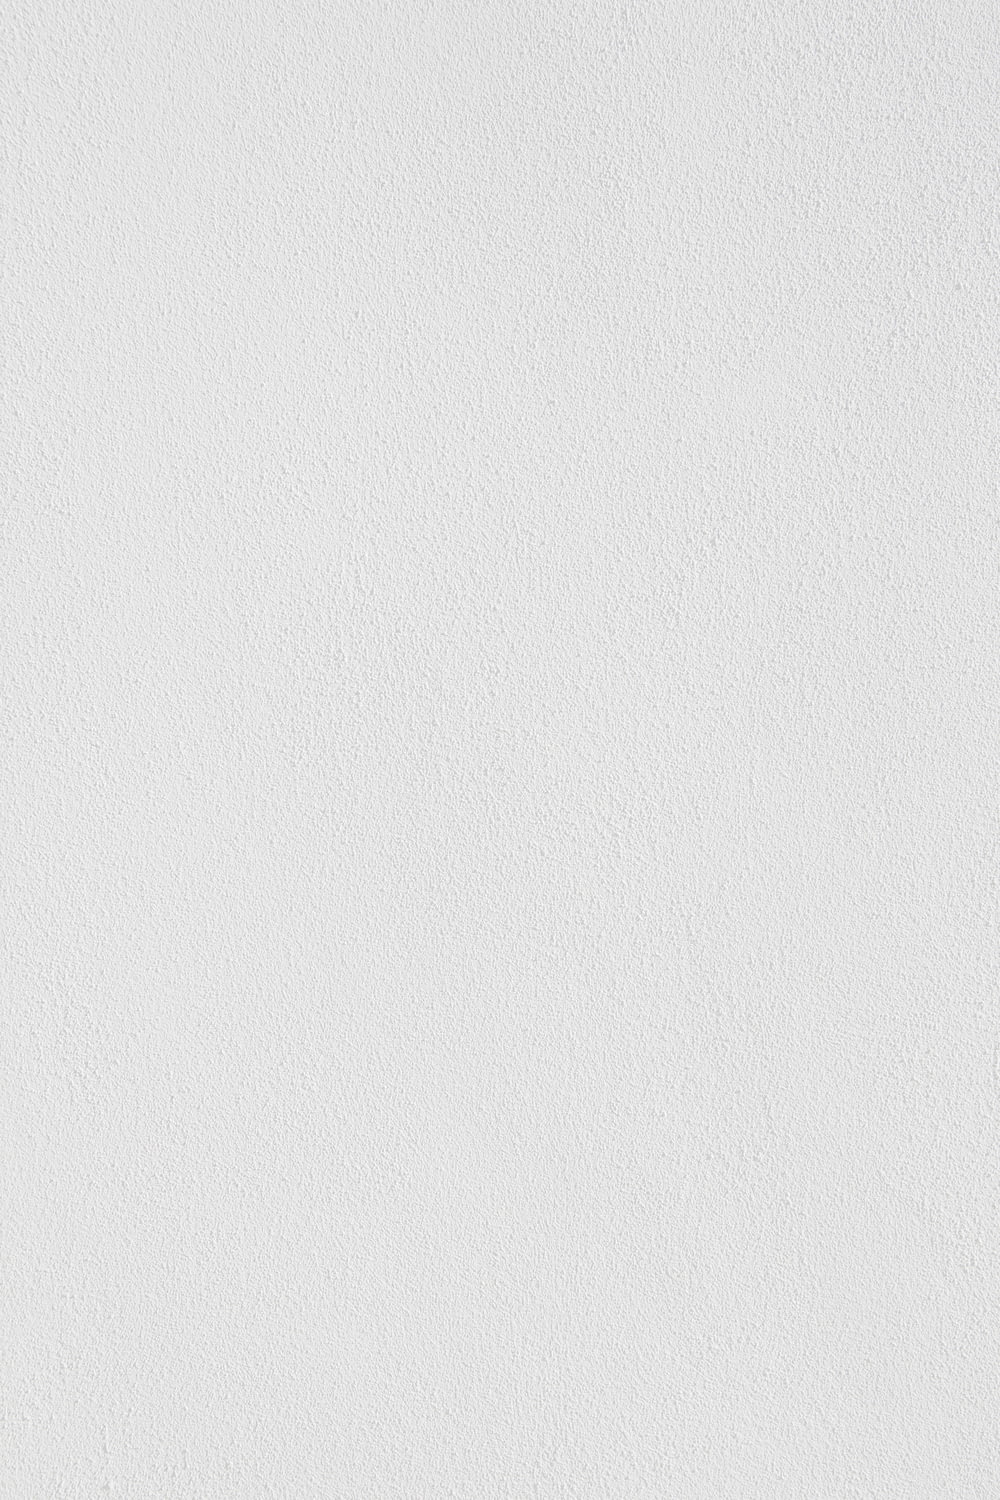 Pintura de pared blanca con línea negra